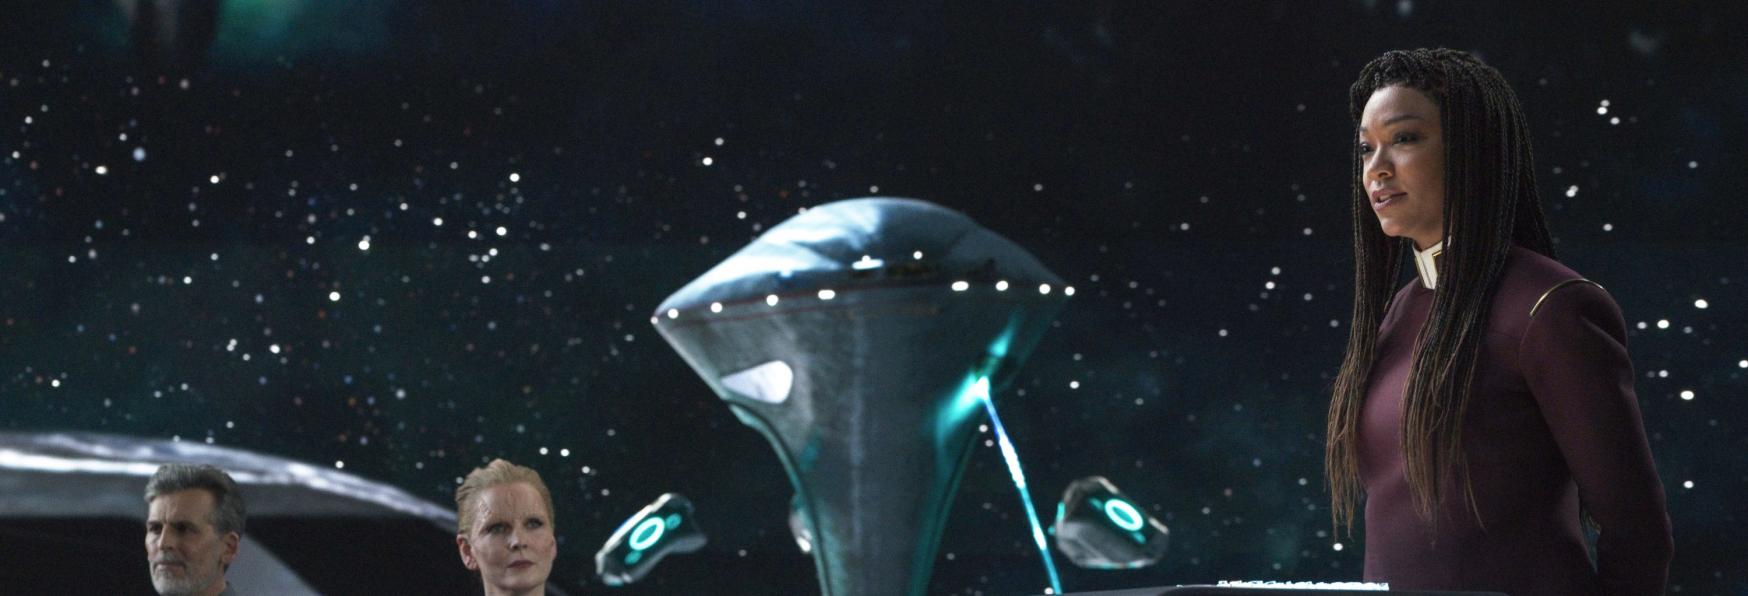 Star Trek: Discovery 4x01 - la Premiere rende omaggio a Star Trek: Enterprise